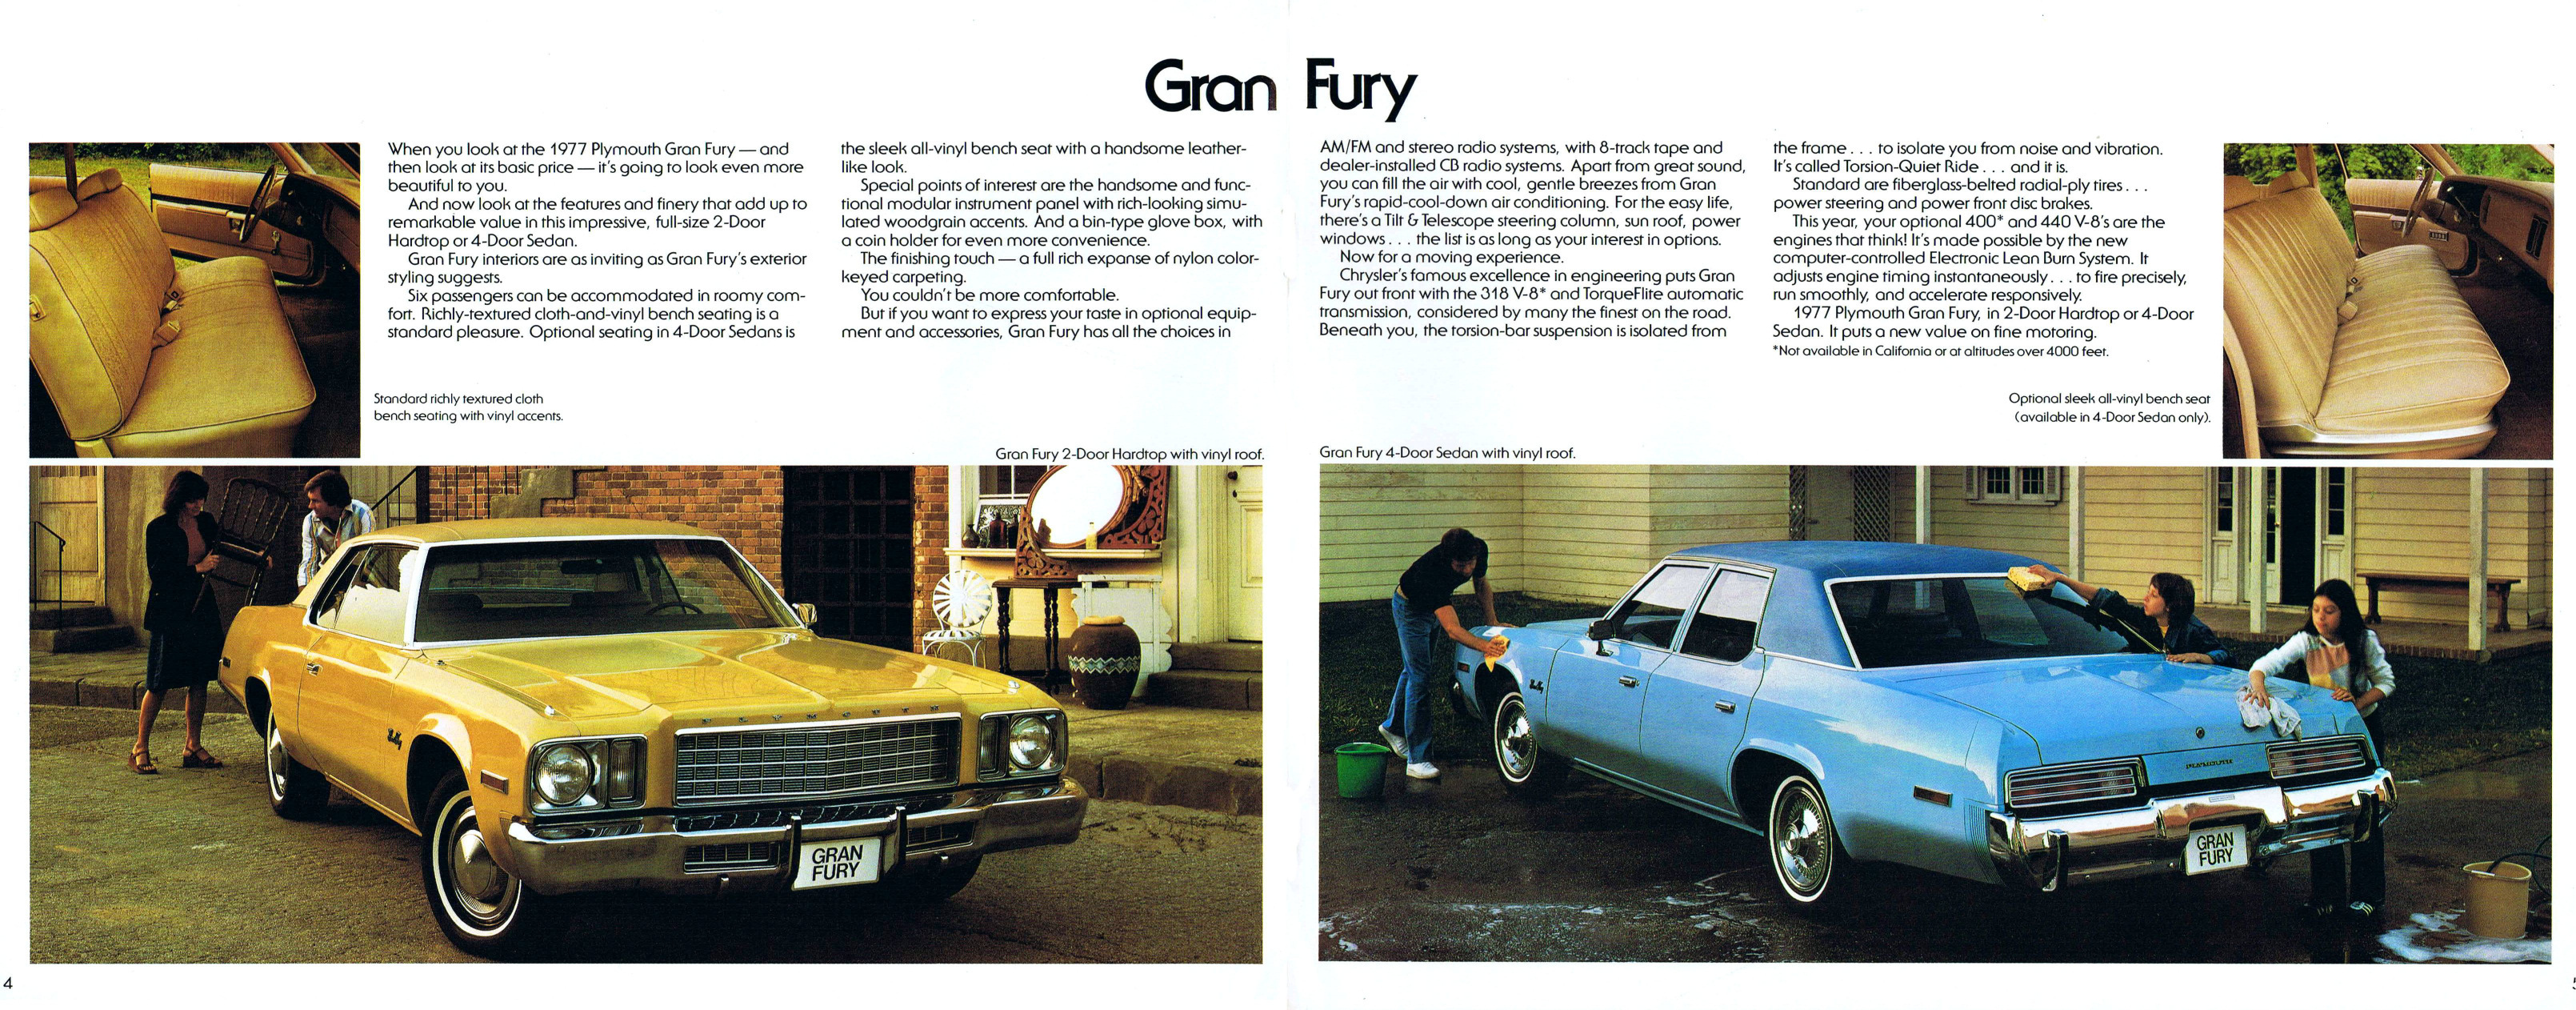 1977_Plymouth_Gran_Fury-04-05